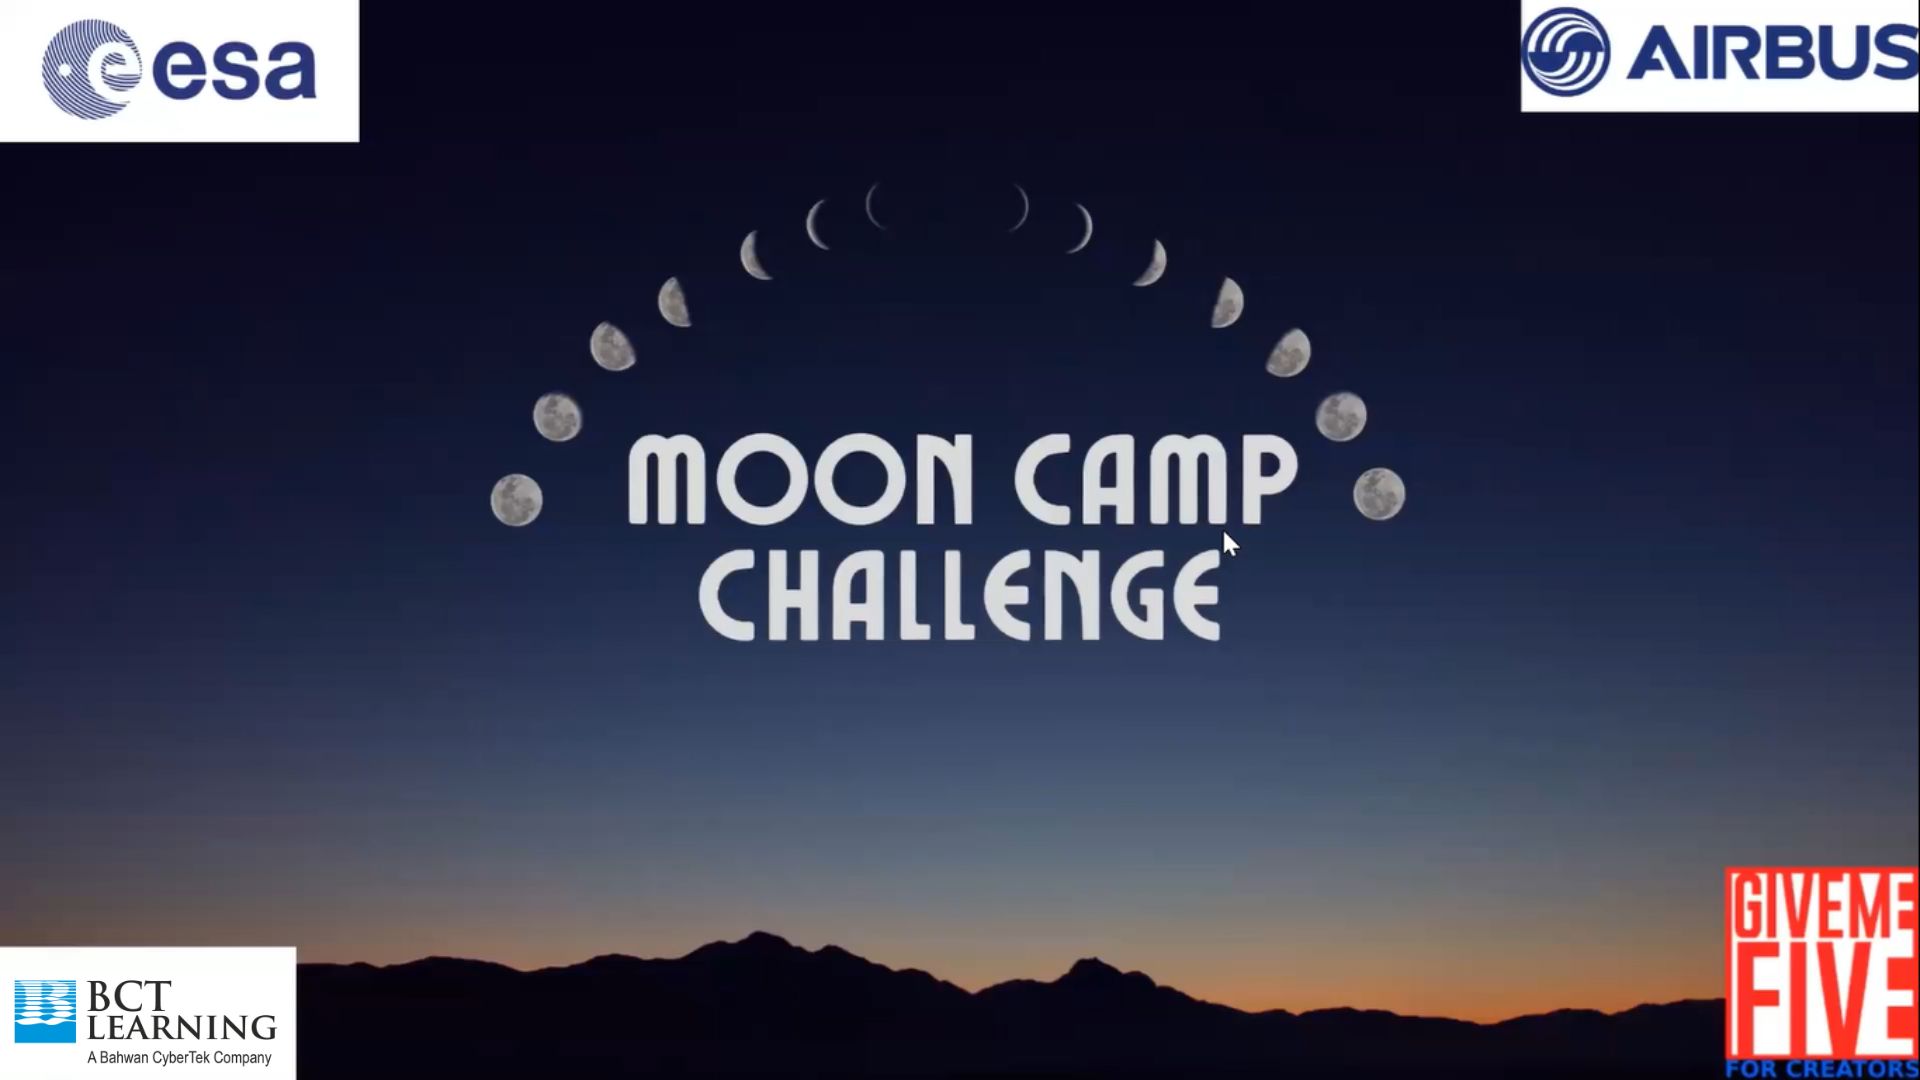 ESA Moon Camp Challenge Webinar Image